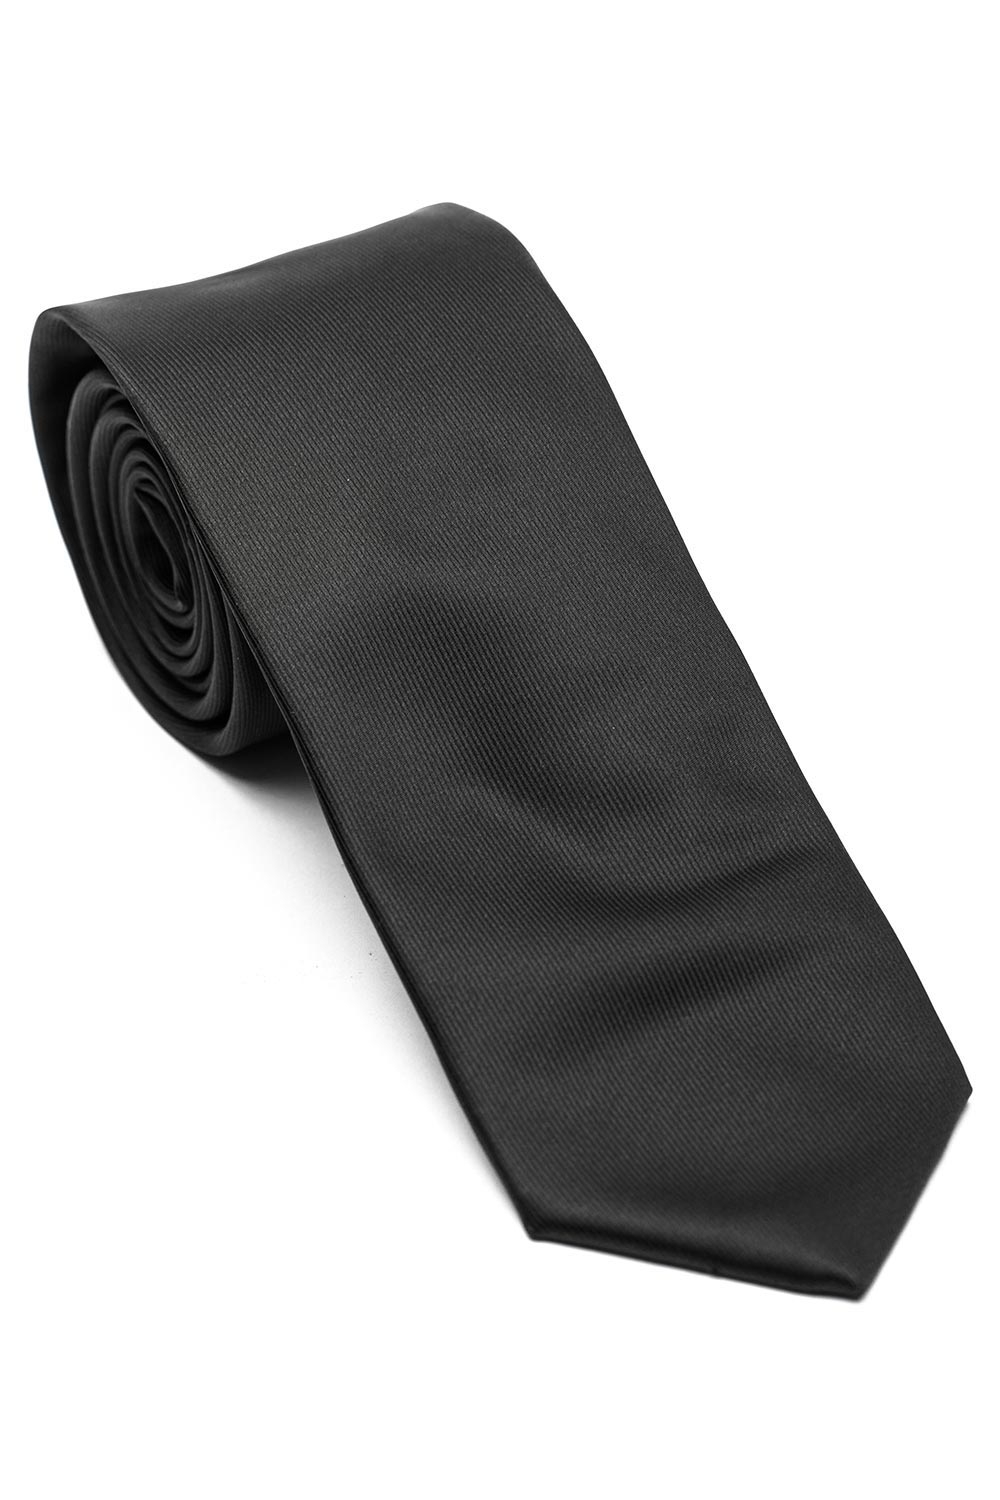 Cravata poliester tesut neagra uni 0